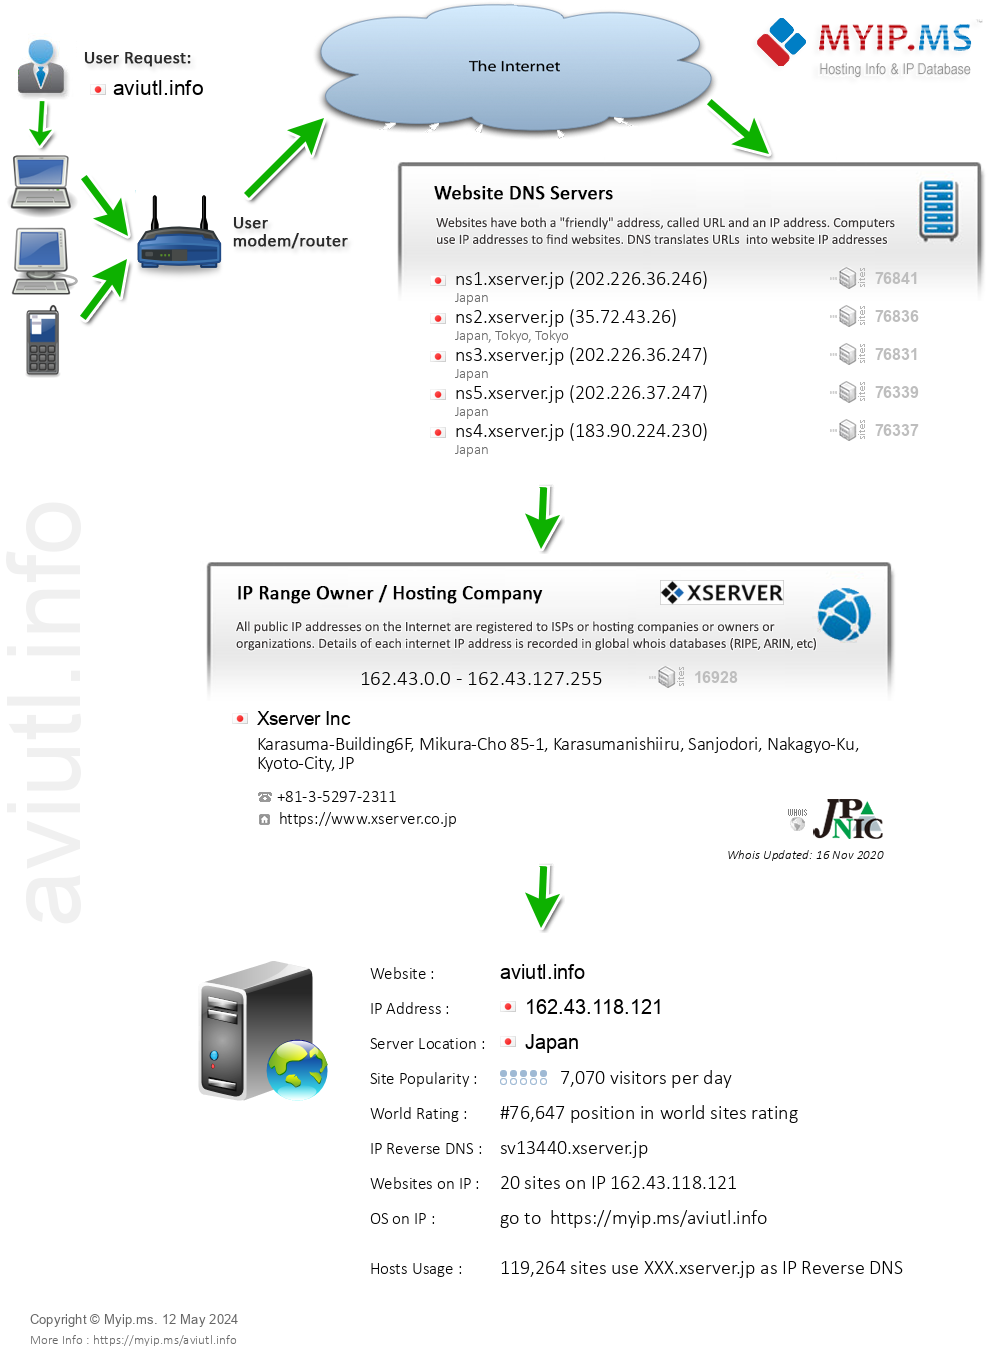 Aviutl.info - Website Hosting Visual IP Diagram